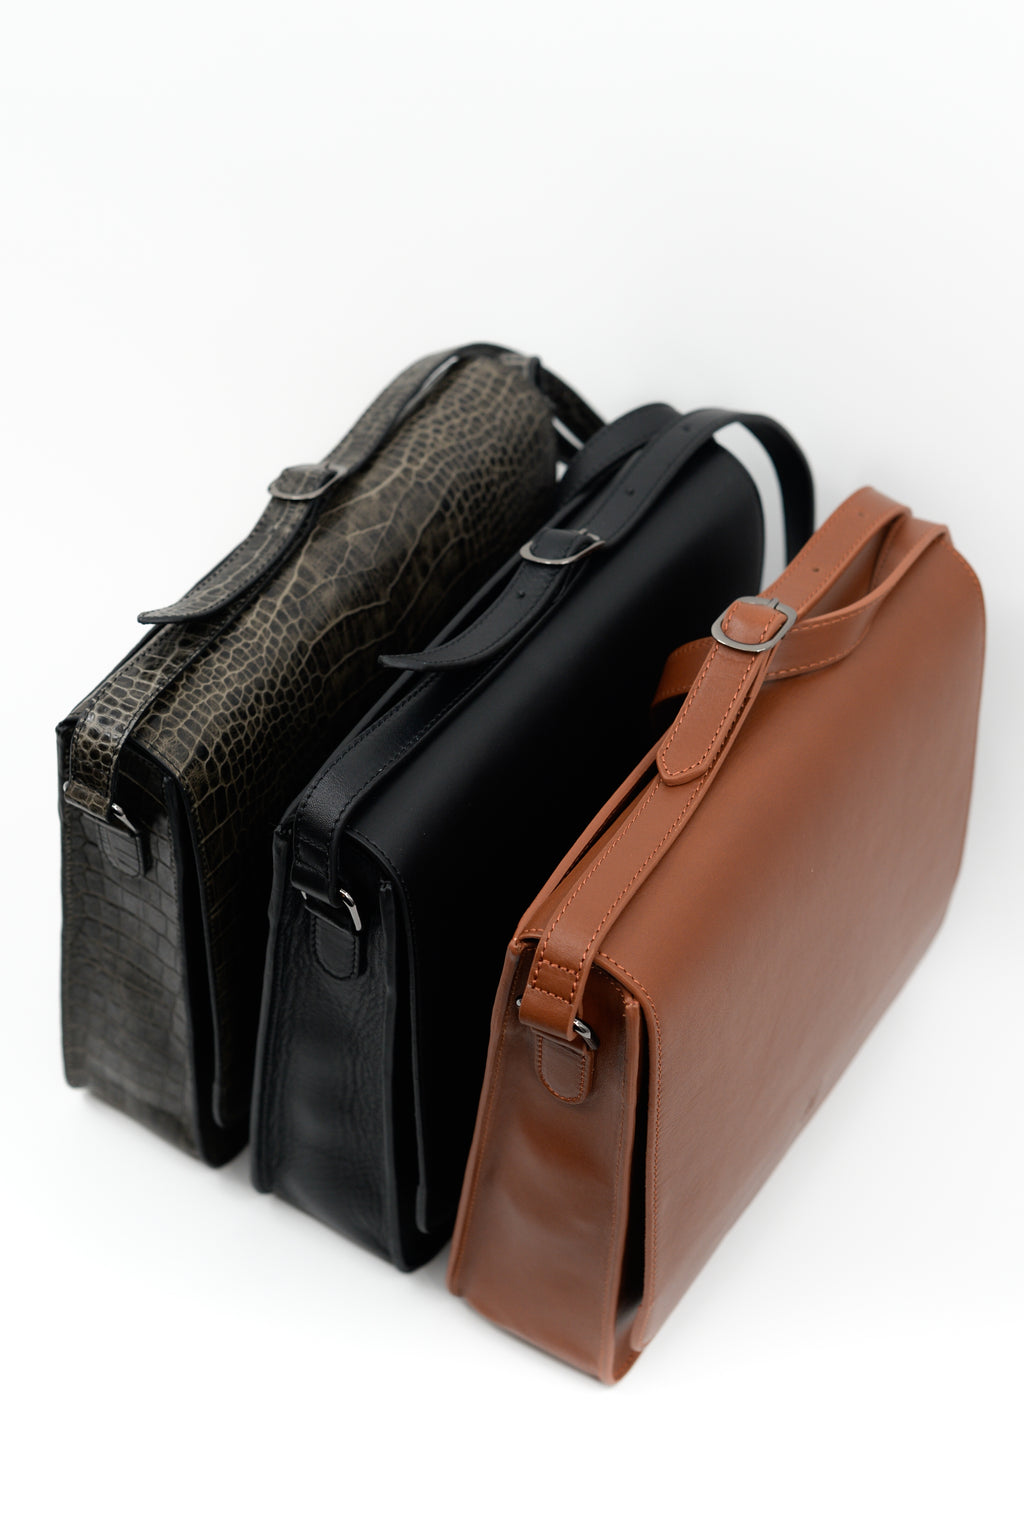 Medium crossbody handbag in black nappa leather